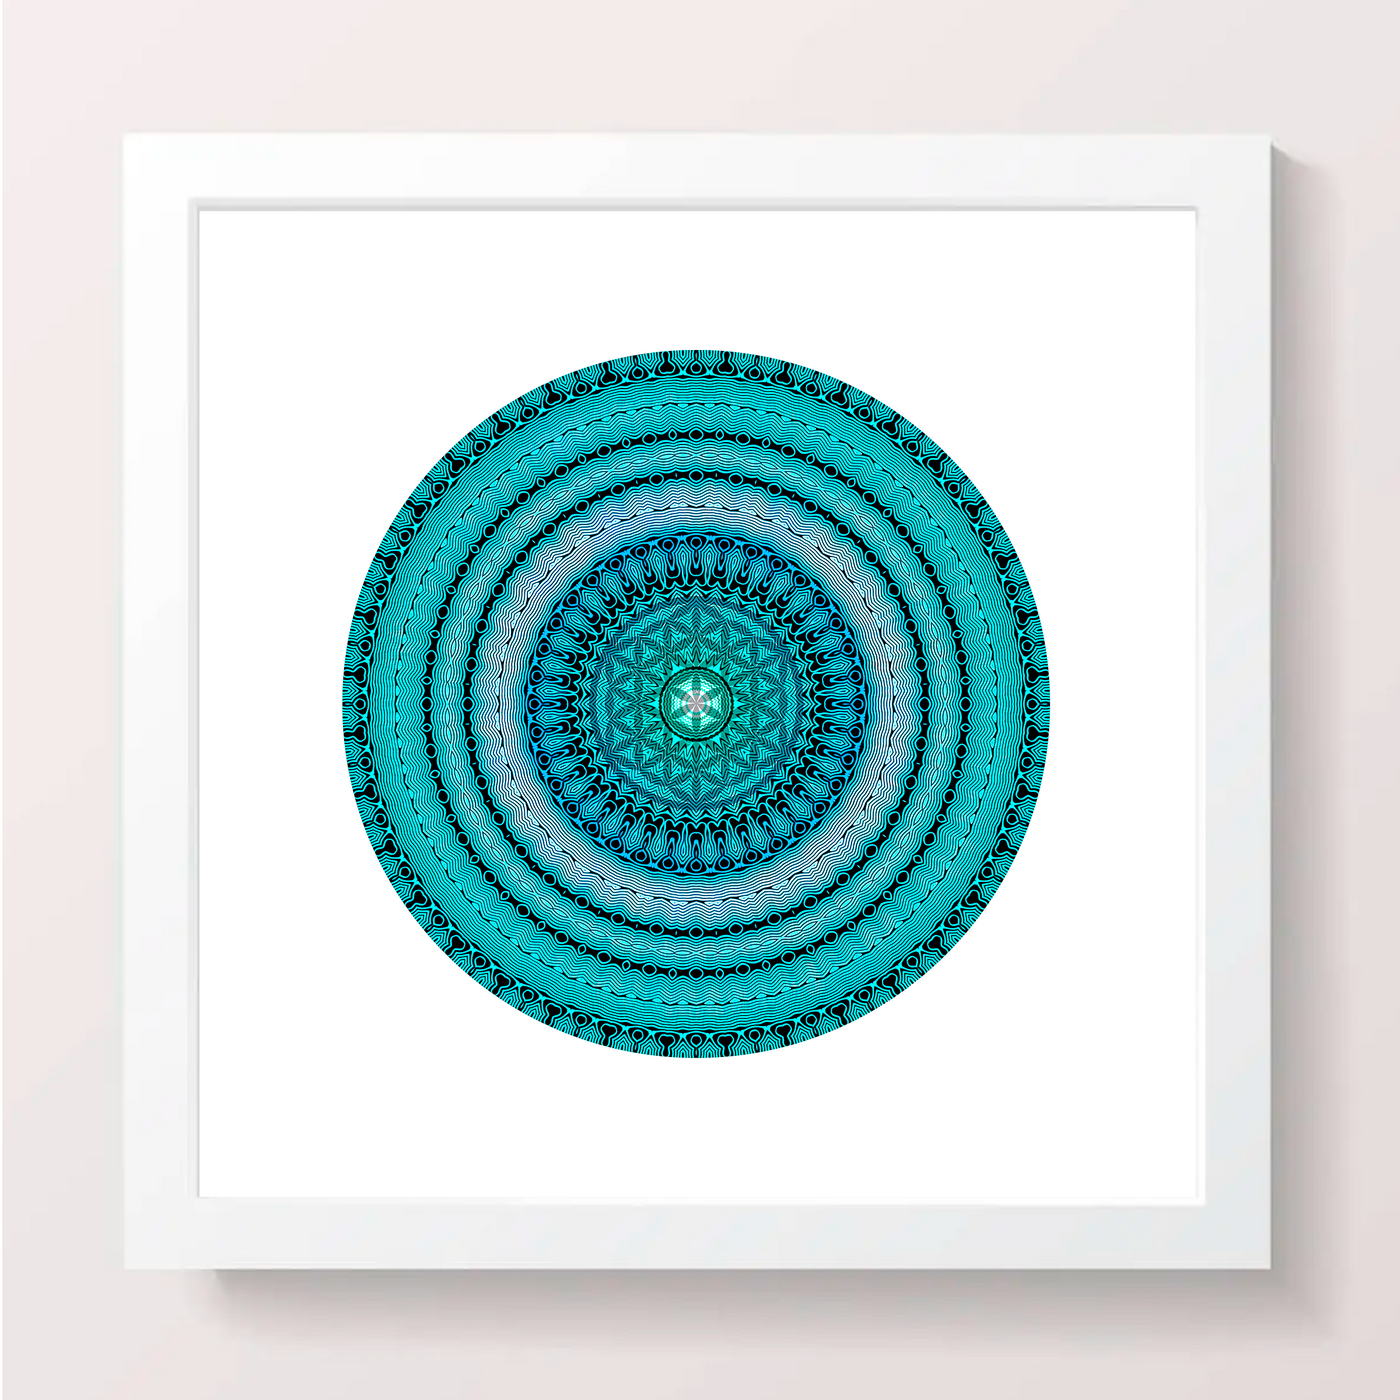 17 - ARIEL - Giclée Circle Art Print - On 8" x 8" or 12"x12" Satin Luster Paper - Sacred Geometry Symbols of Healing Arts